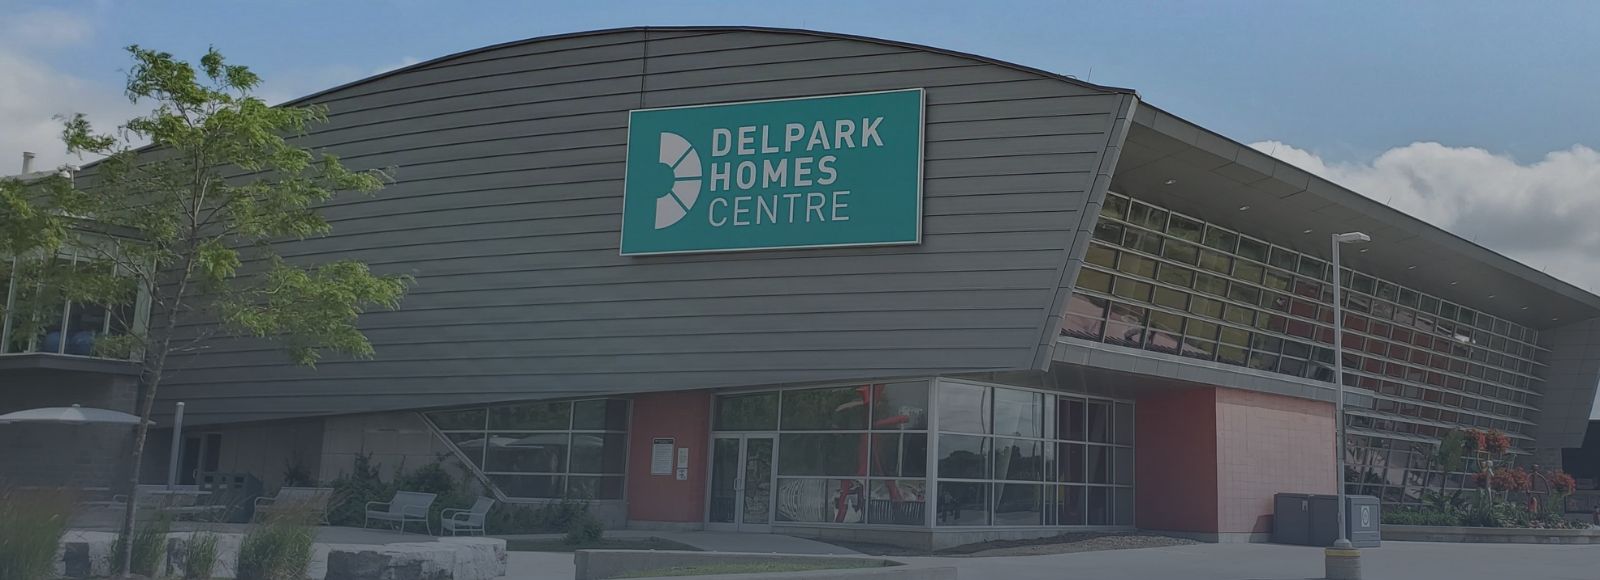 Delpark Homes Centre building